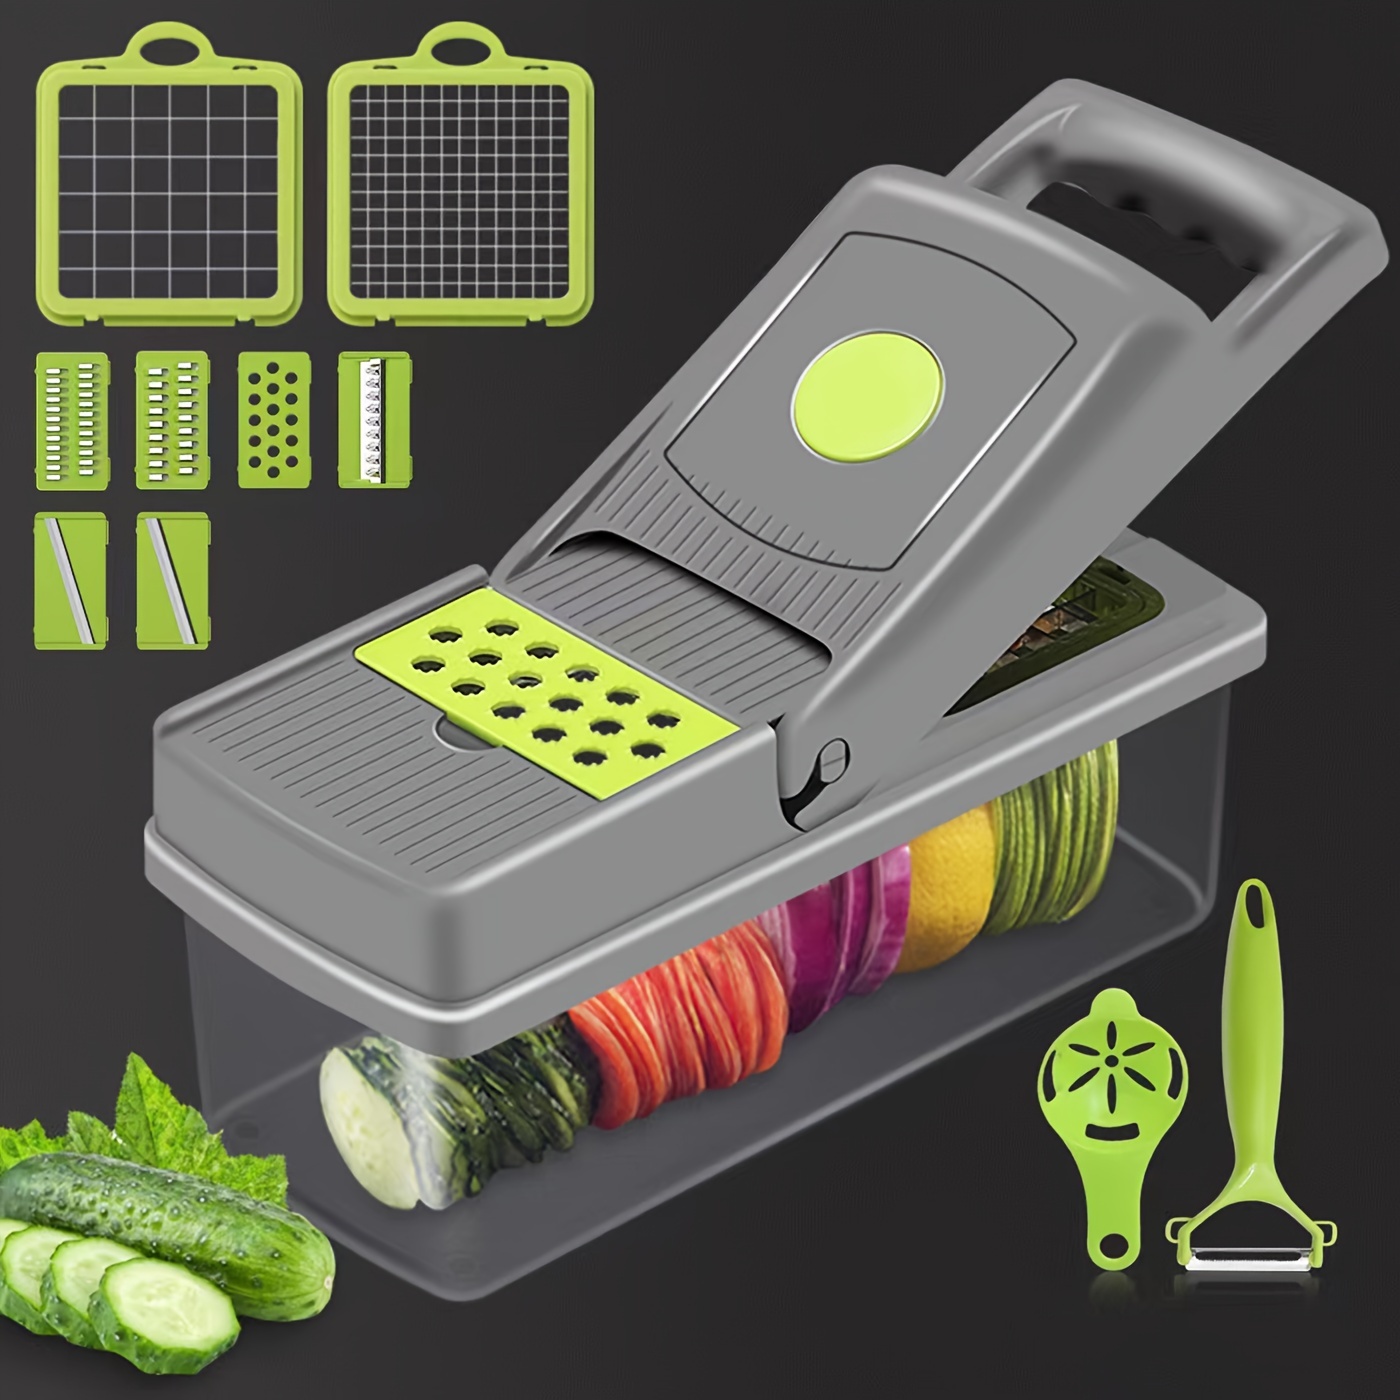 Vegetable Slicer, Cutter, Chopper - Multifunctional Vegetable Graters  Shredders Fruit Kitchen Tool 